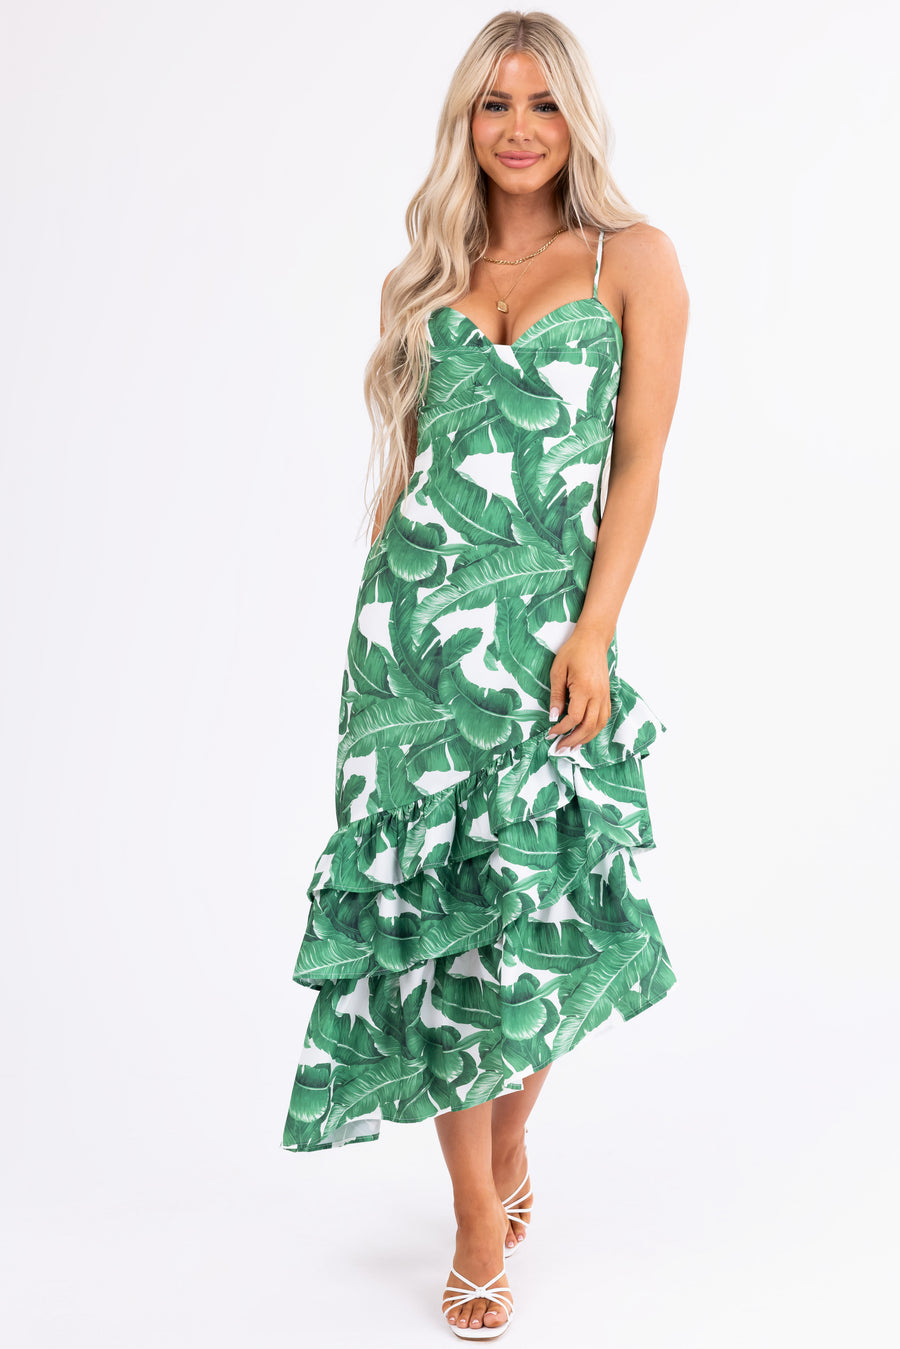 Ivory and Hunter Green Leaf Print Midi Dress